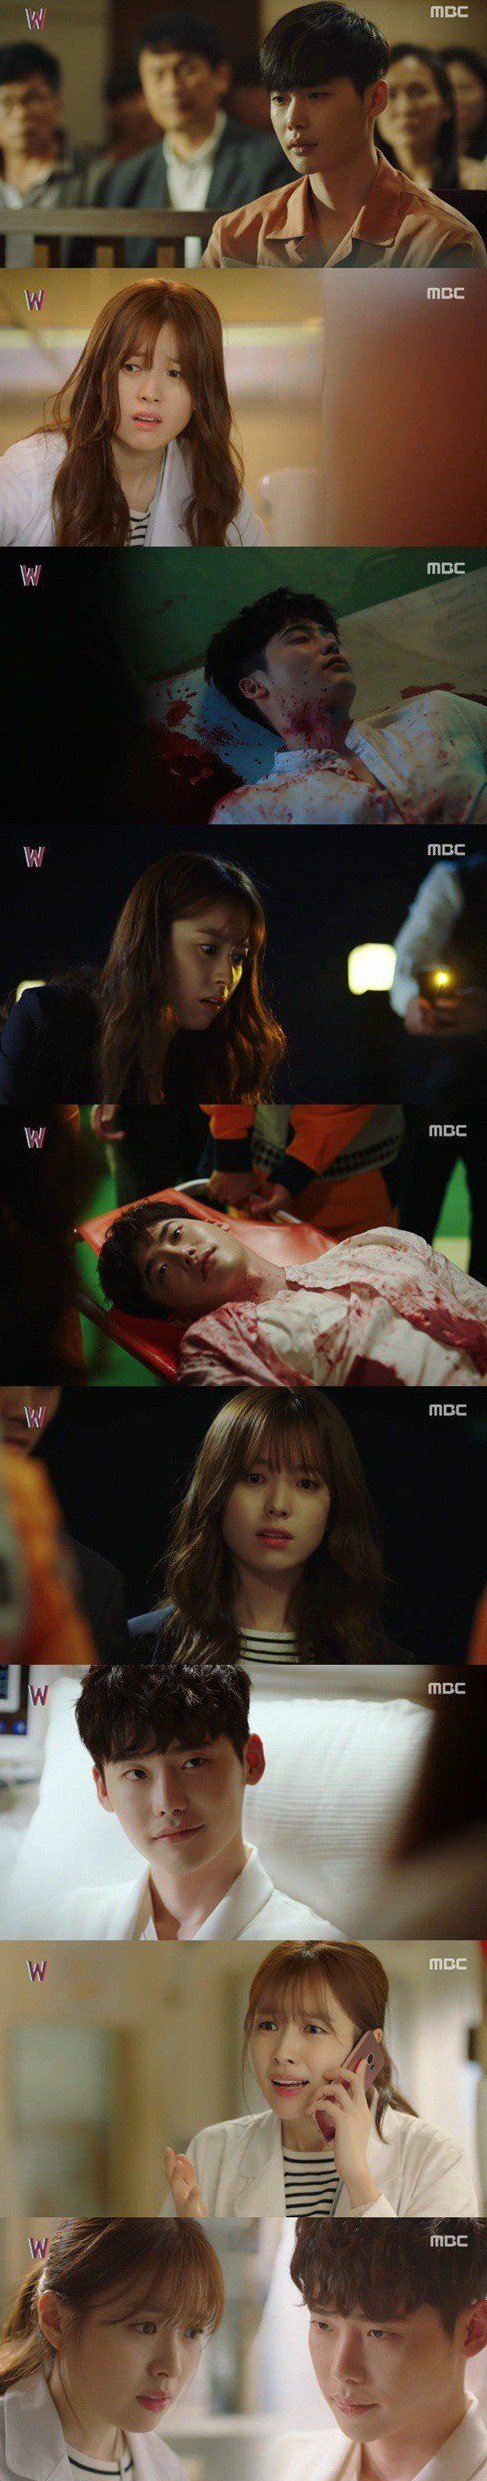 episode 1 captures for the Korean drama 'W'